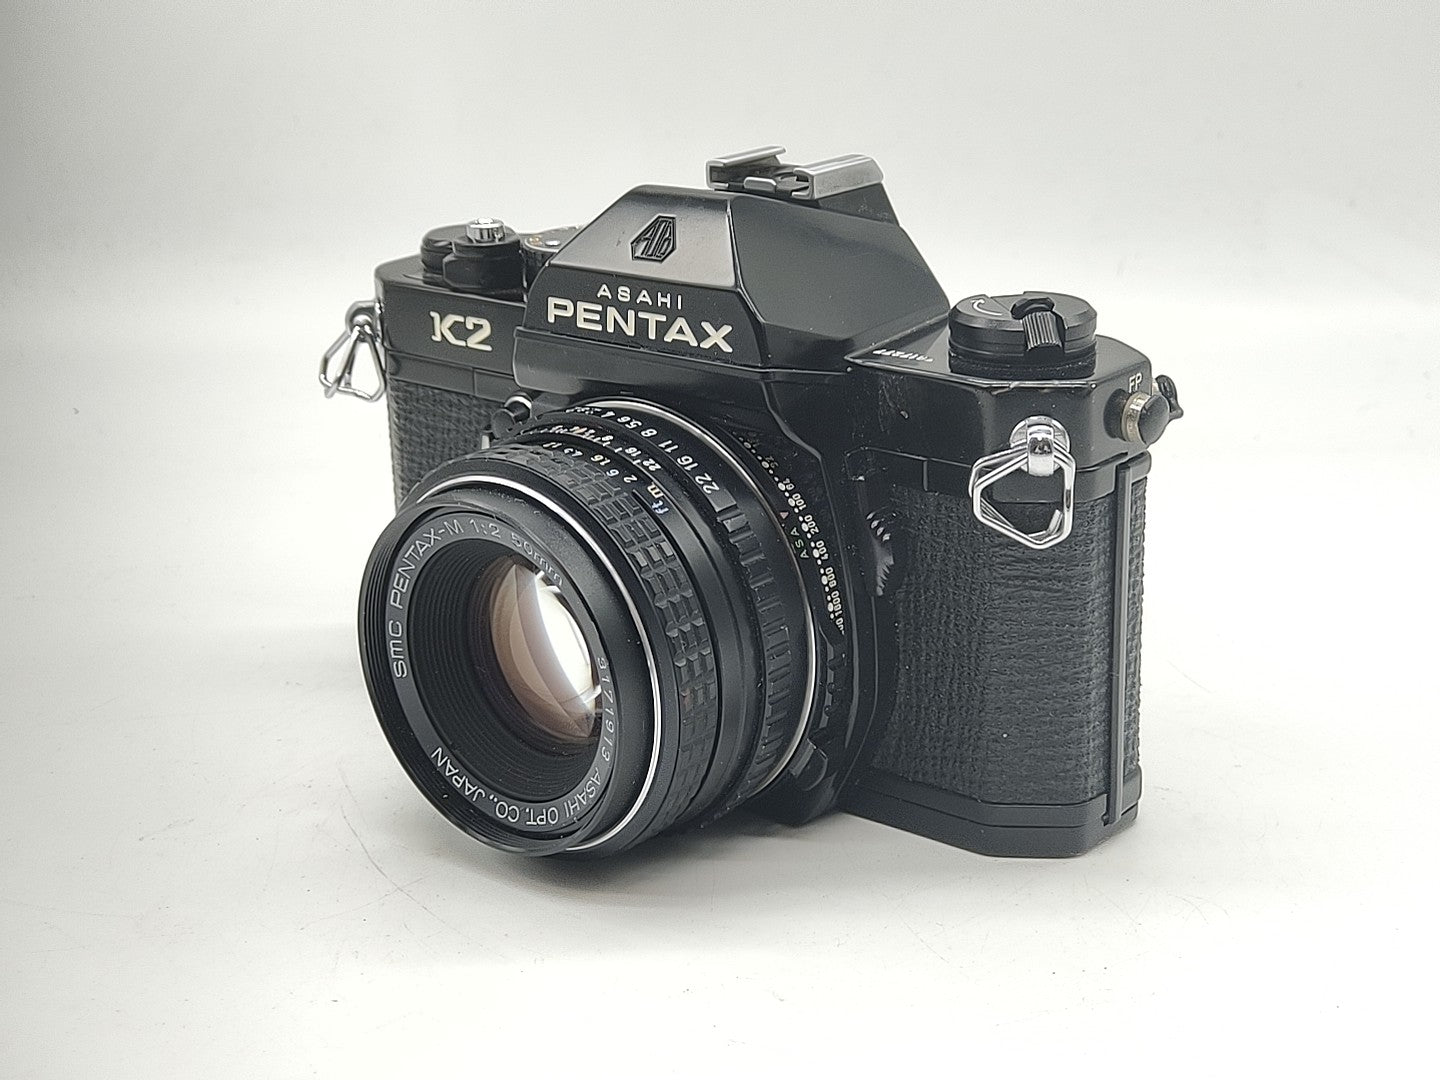 Pentax K2 SLR film camera with 50mm lens